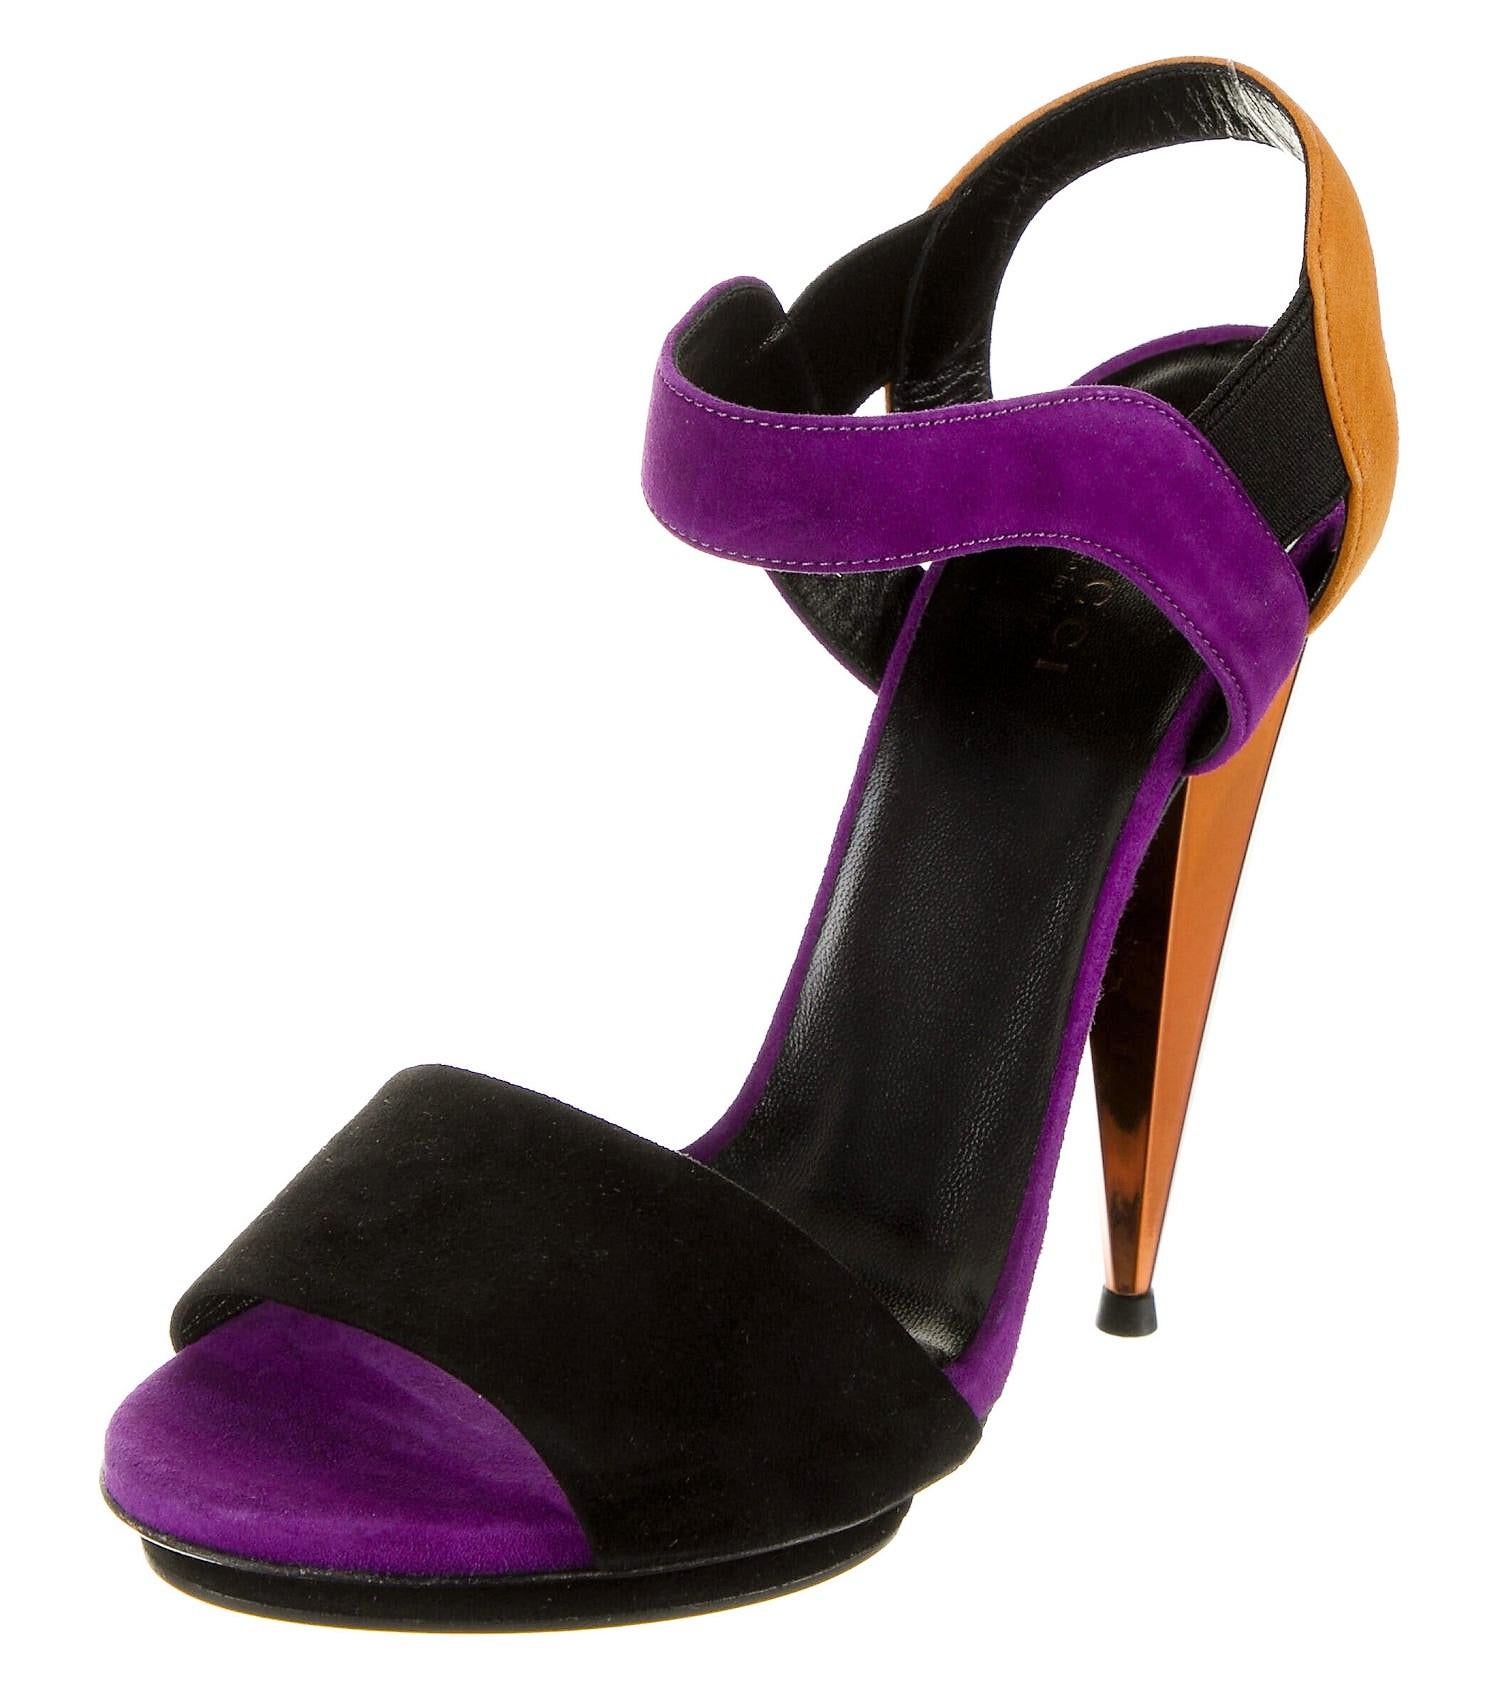 New Gucci Ad Runway 2014 Purple Orange Suede Mirrored Pump Heels Sz 39.5 For Sale 1